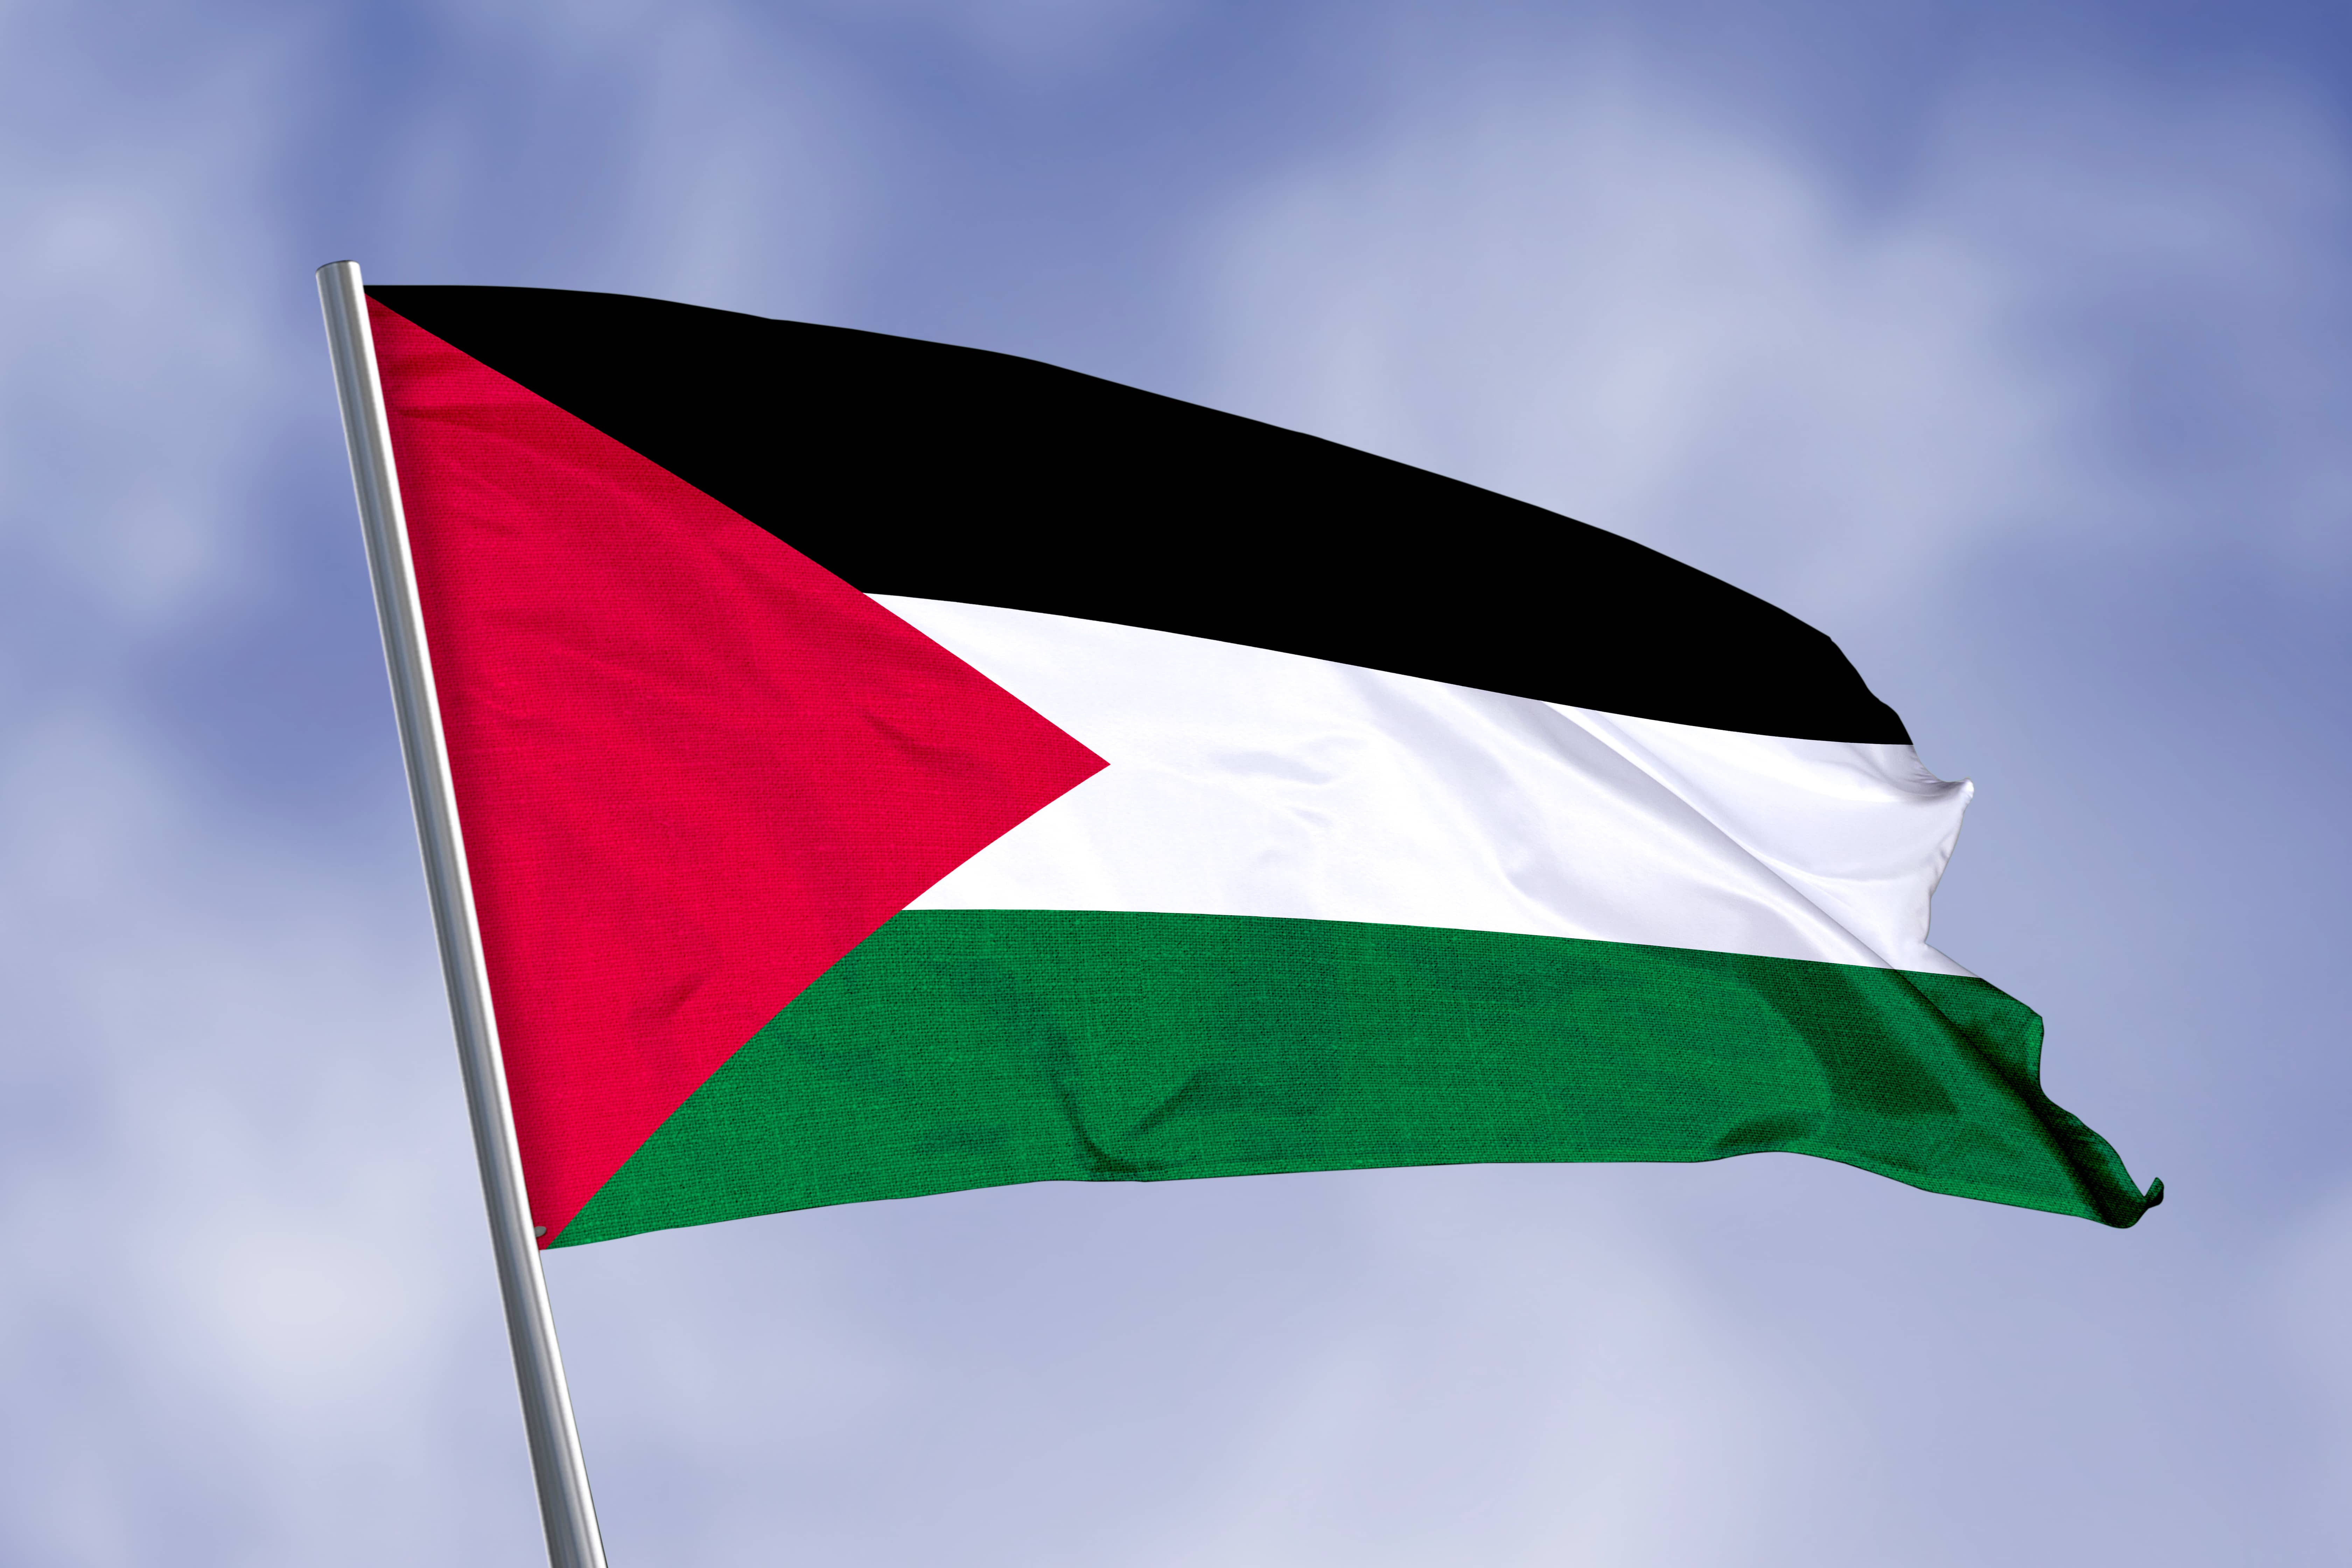 palestineflagisolatedonskybackground-closeupwavingflag